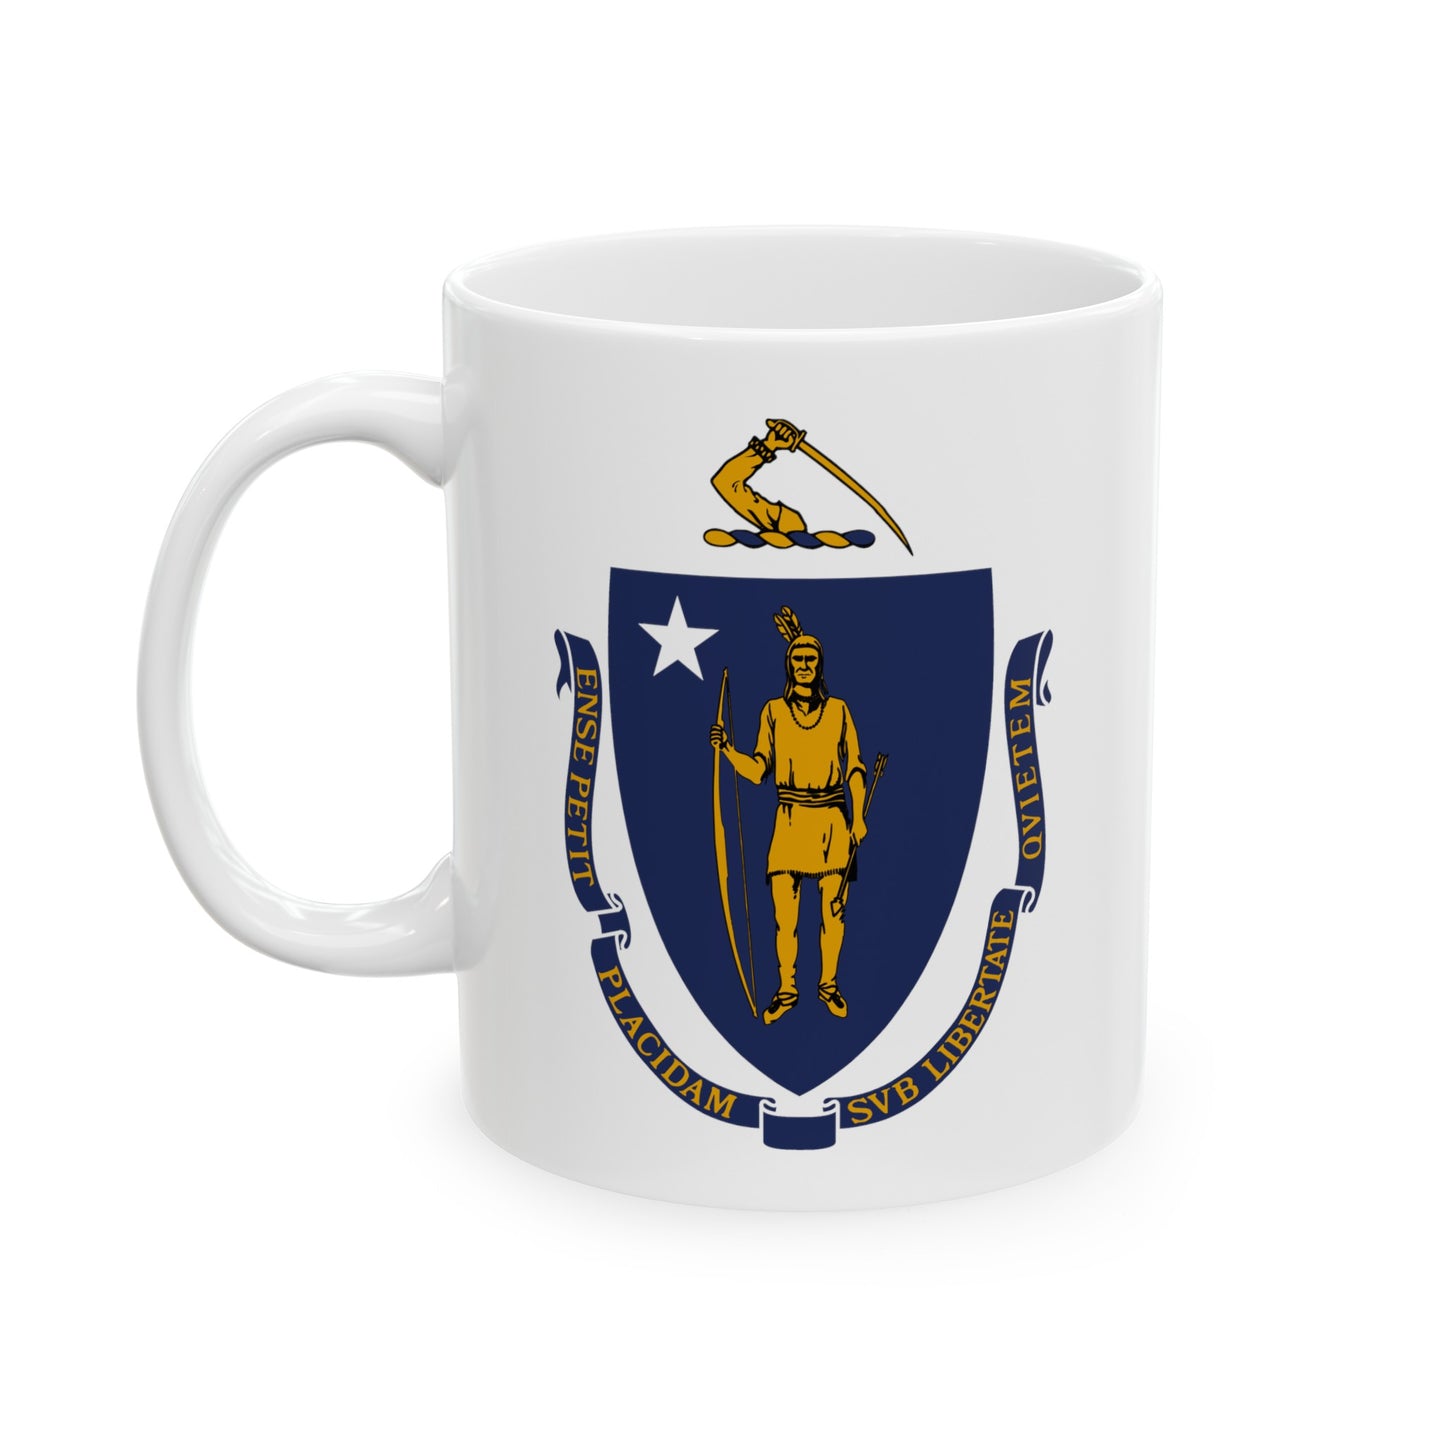 Commonwealth of Massachusetts State Flag - Double Sided White Ceramic Coffee Mug 11oz by TheGlassyLass.com